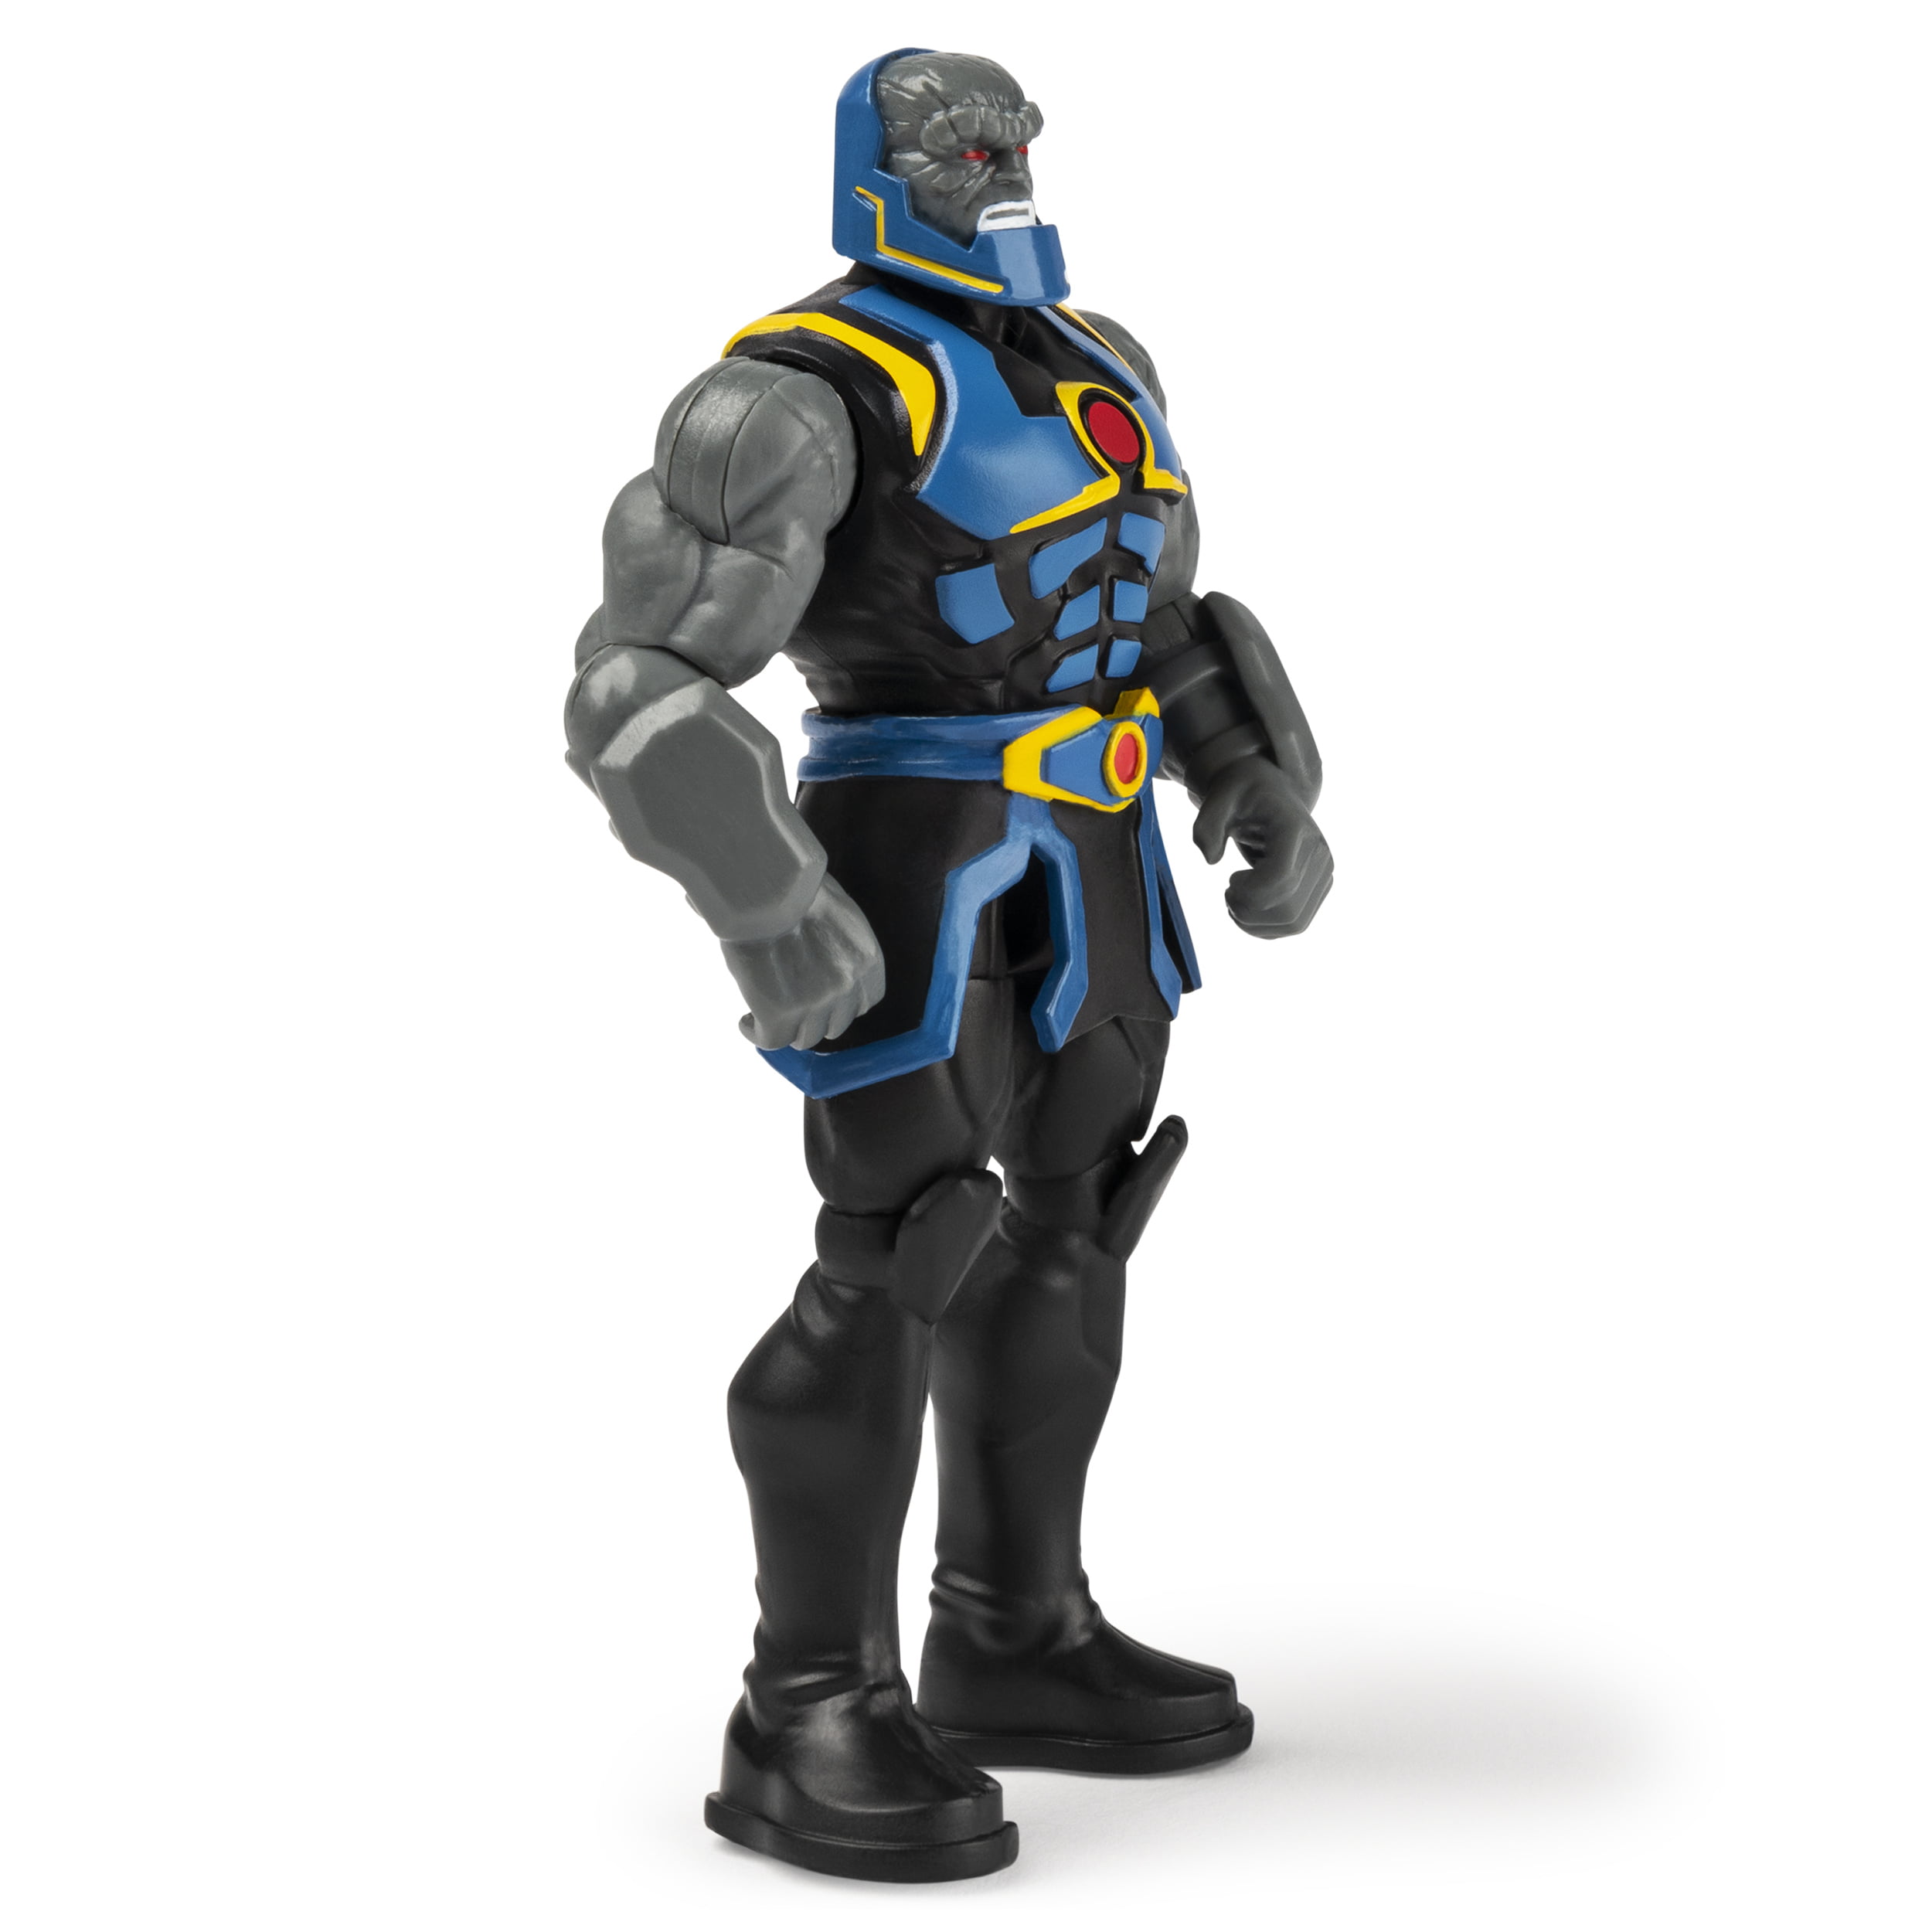 DC Universe Custom Supervillain Darkseid Comic Minifigure ARRIVES IN 2-4 DAYS